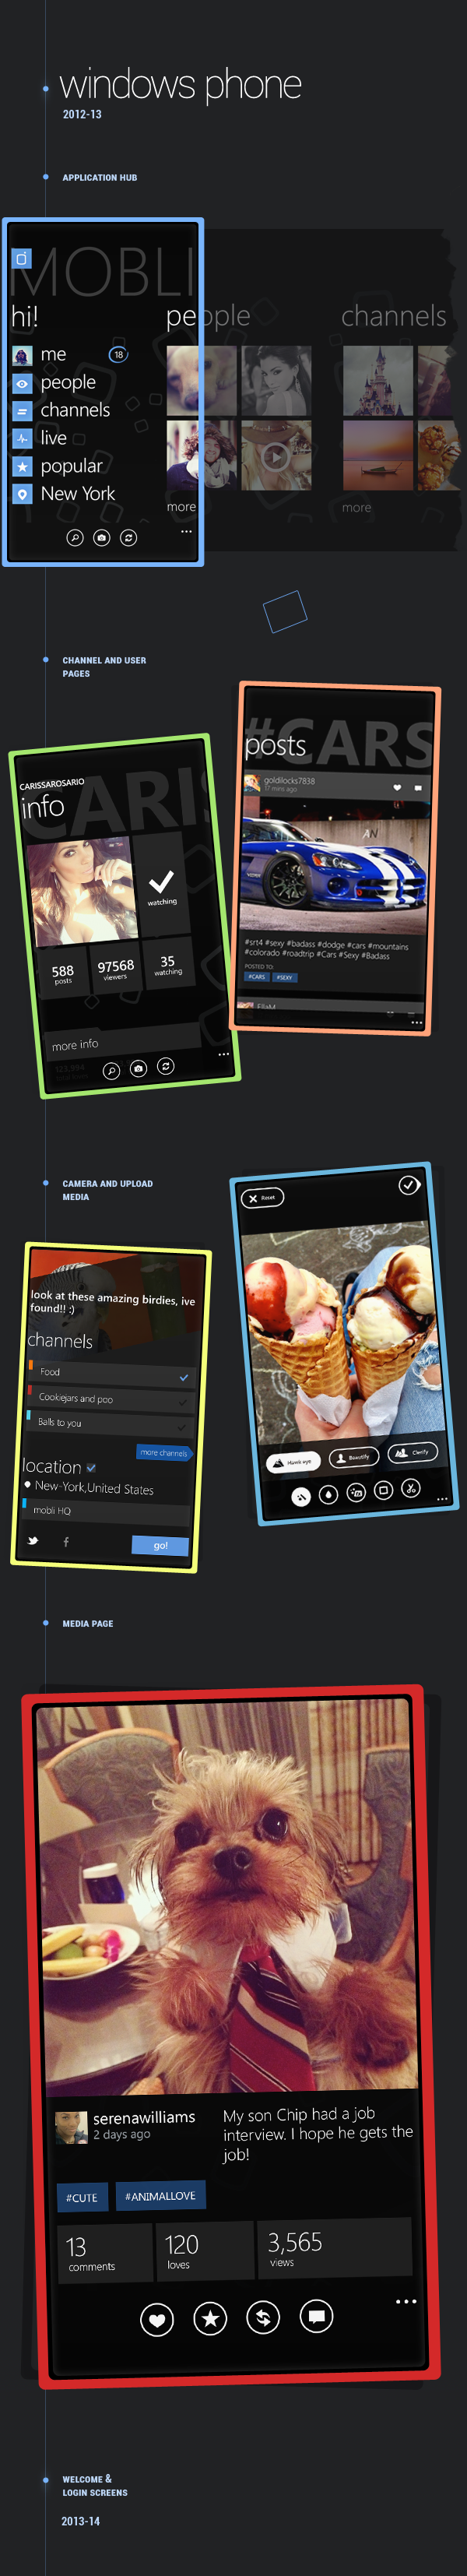 android windows phone Web mobile israel ux UI social